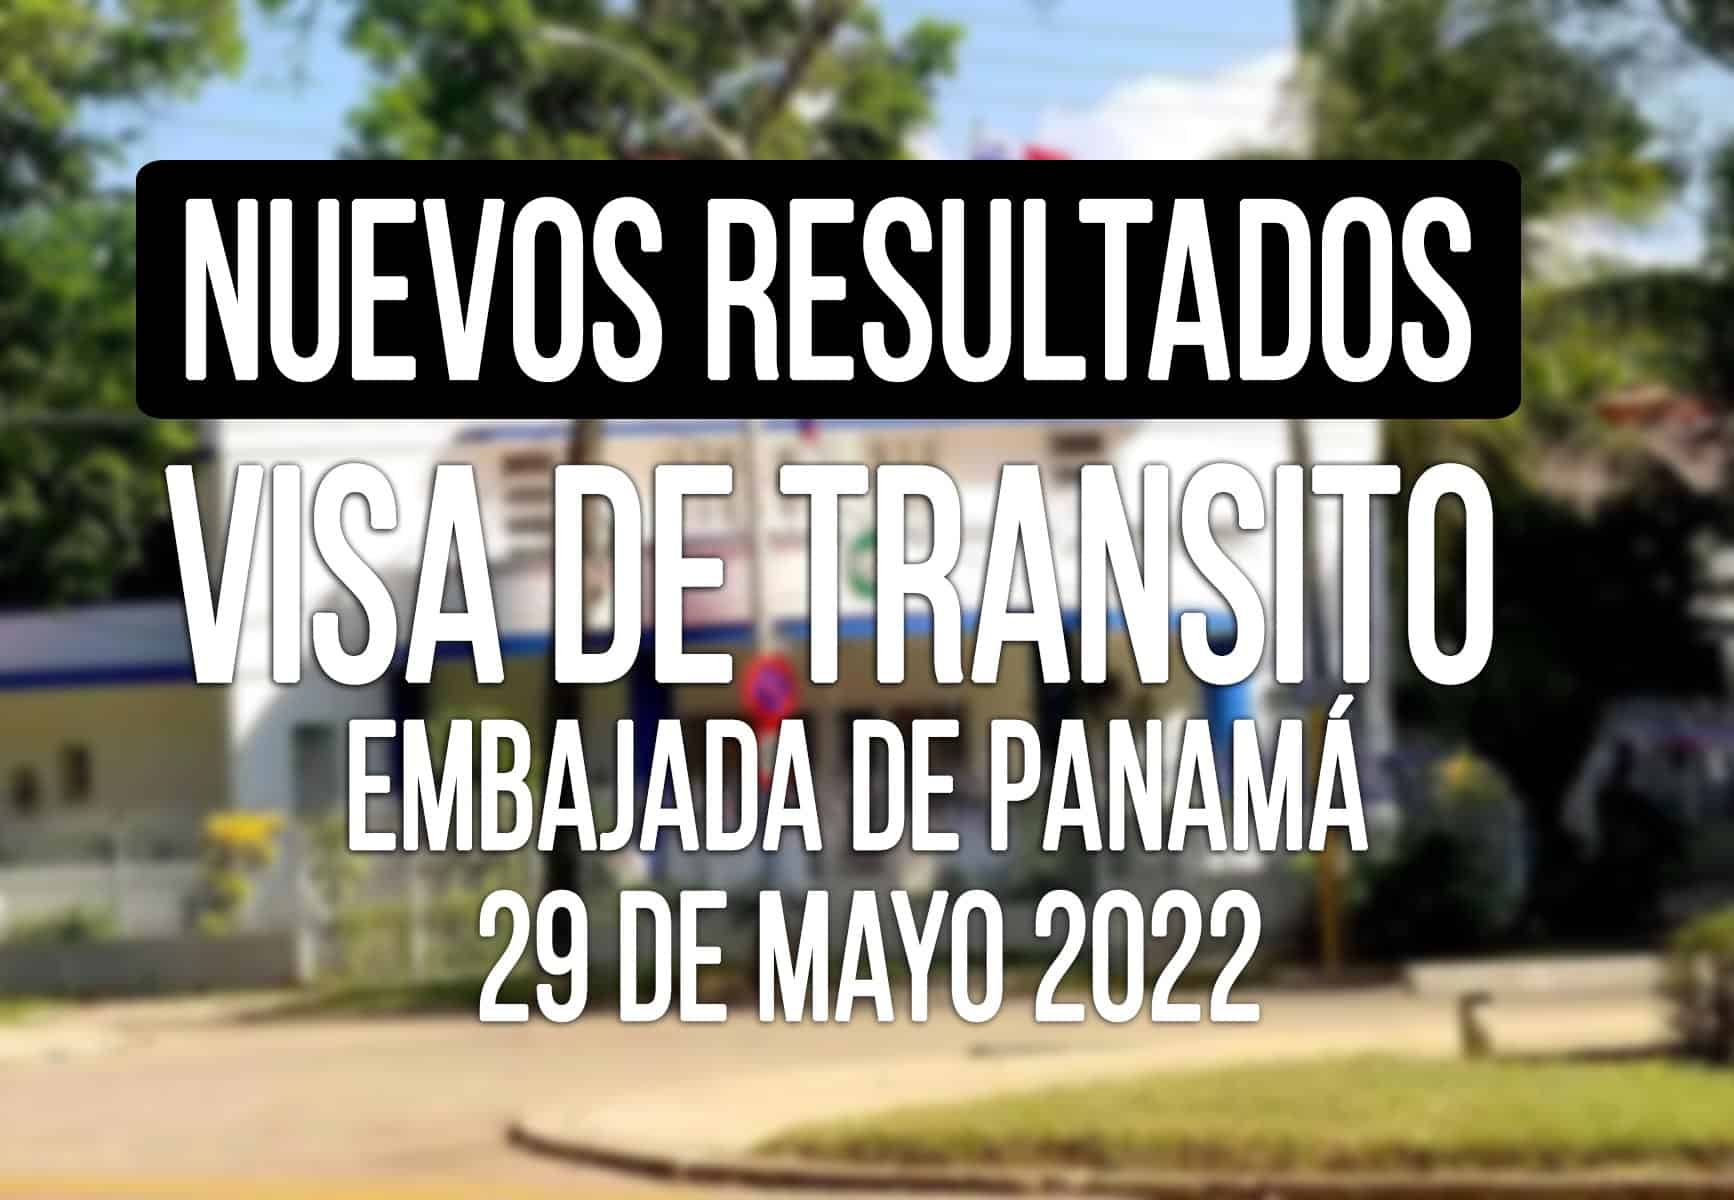 Visas de Tránsito a Panamá 29 de Mayo